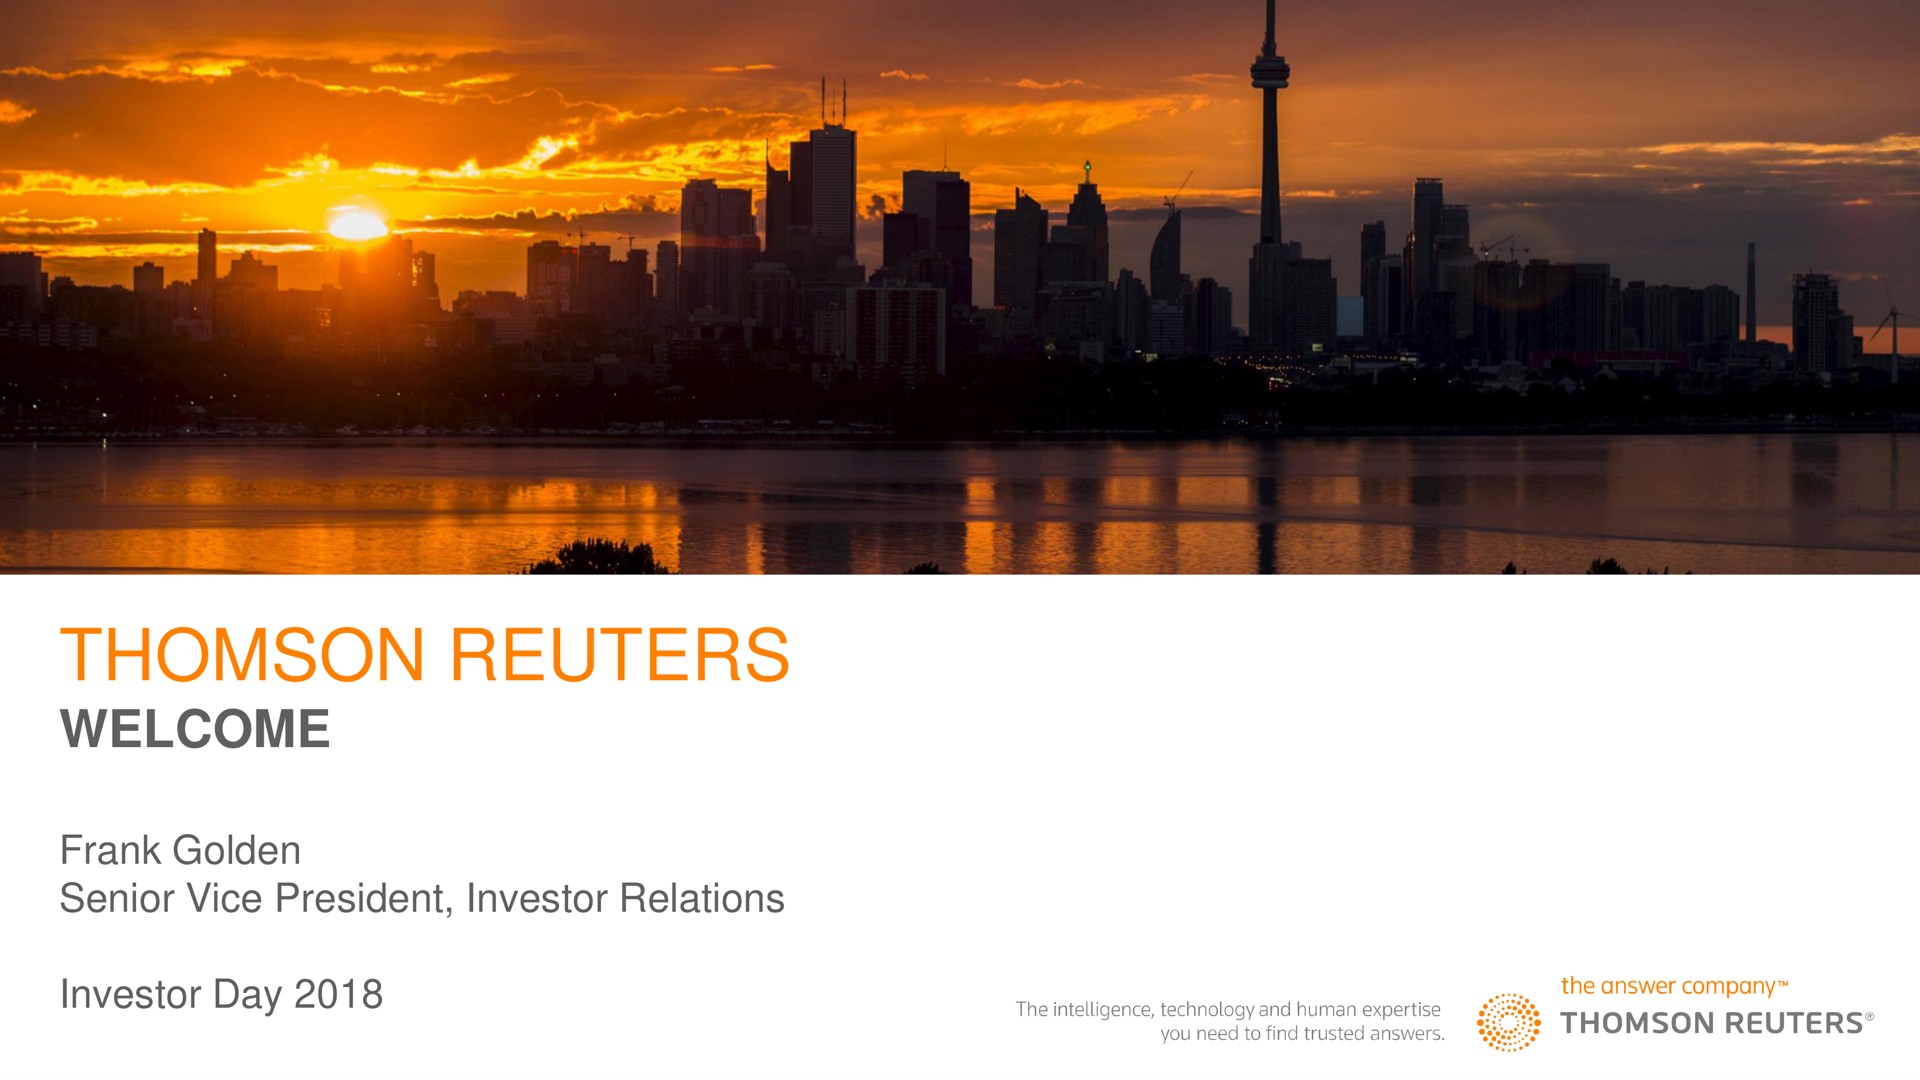 welcome frank golden senior vice president investor relations investor day | Thomson Reuters